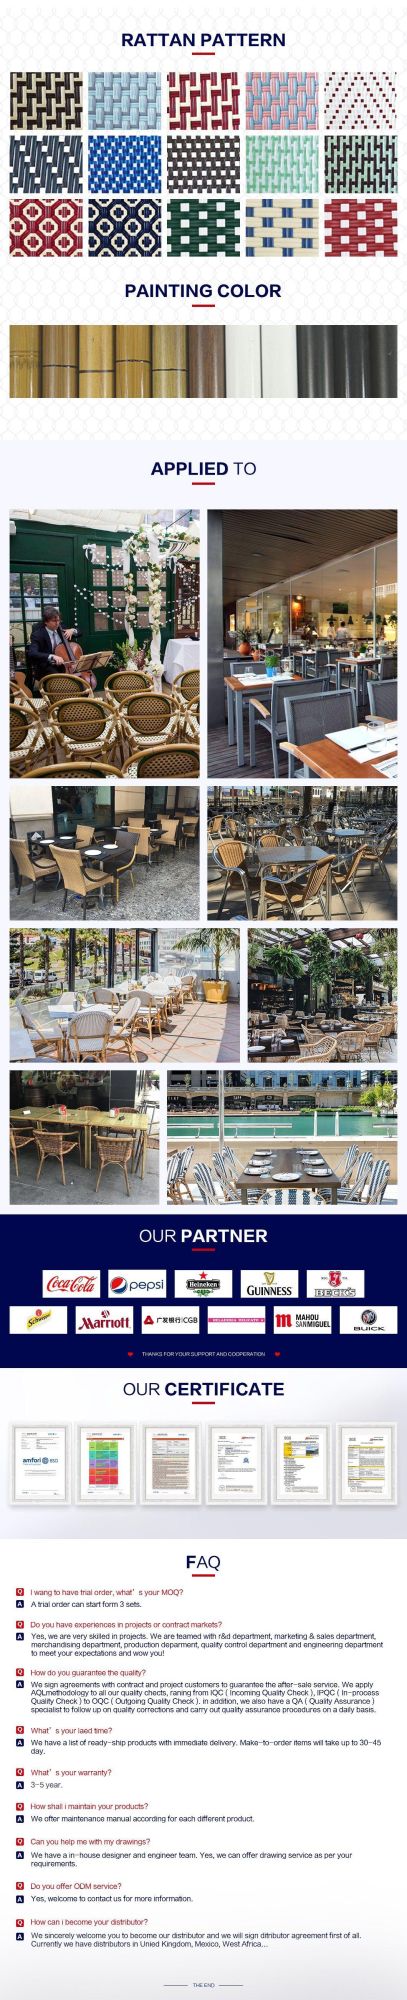 2021 All Weather Patio Furniture Luxury Restaurant Hotel Wicker Rattan Dining HD Designs Garden Set Rattan Outdoor Furniture